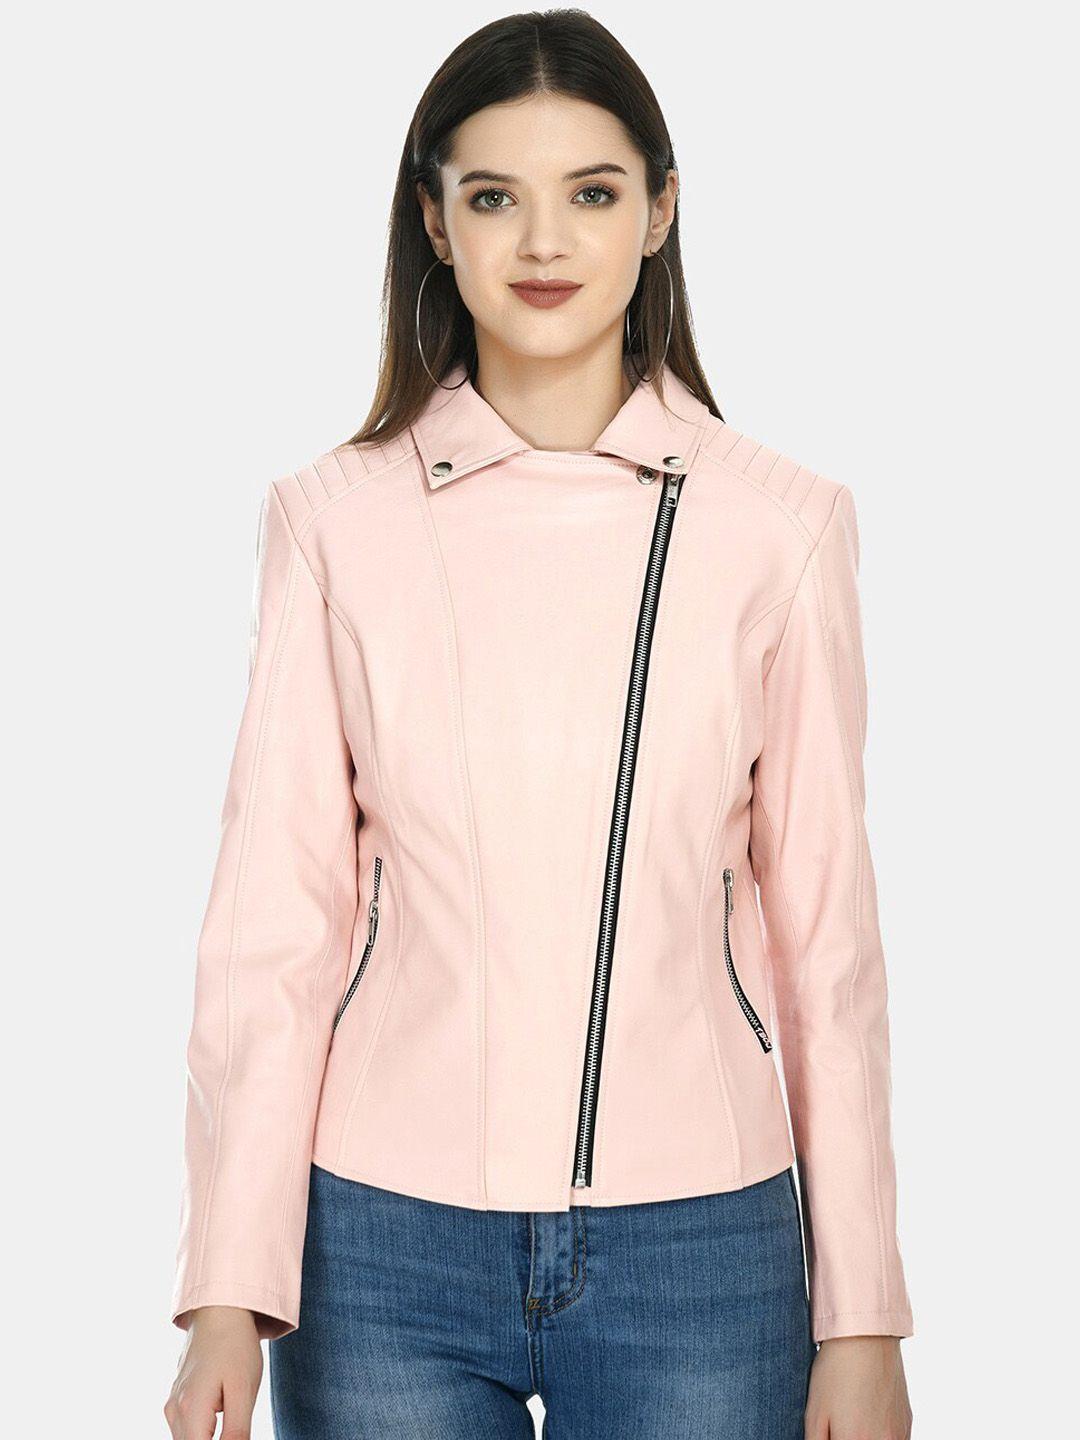 tboj women pink leather lightweight open front jacket